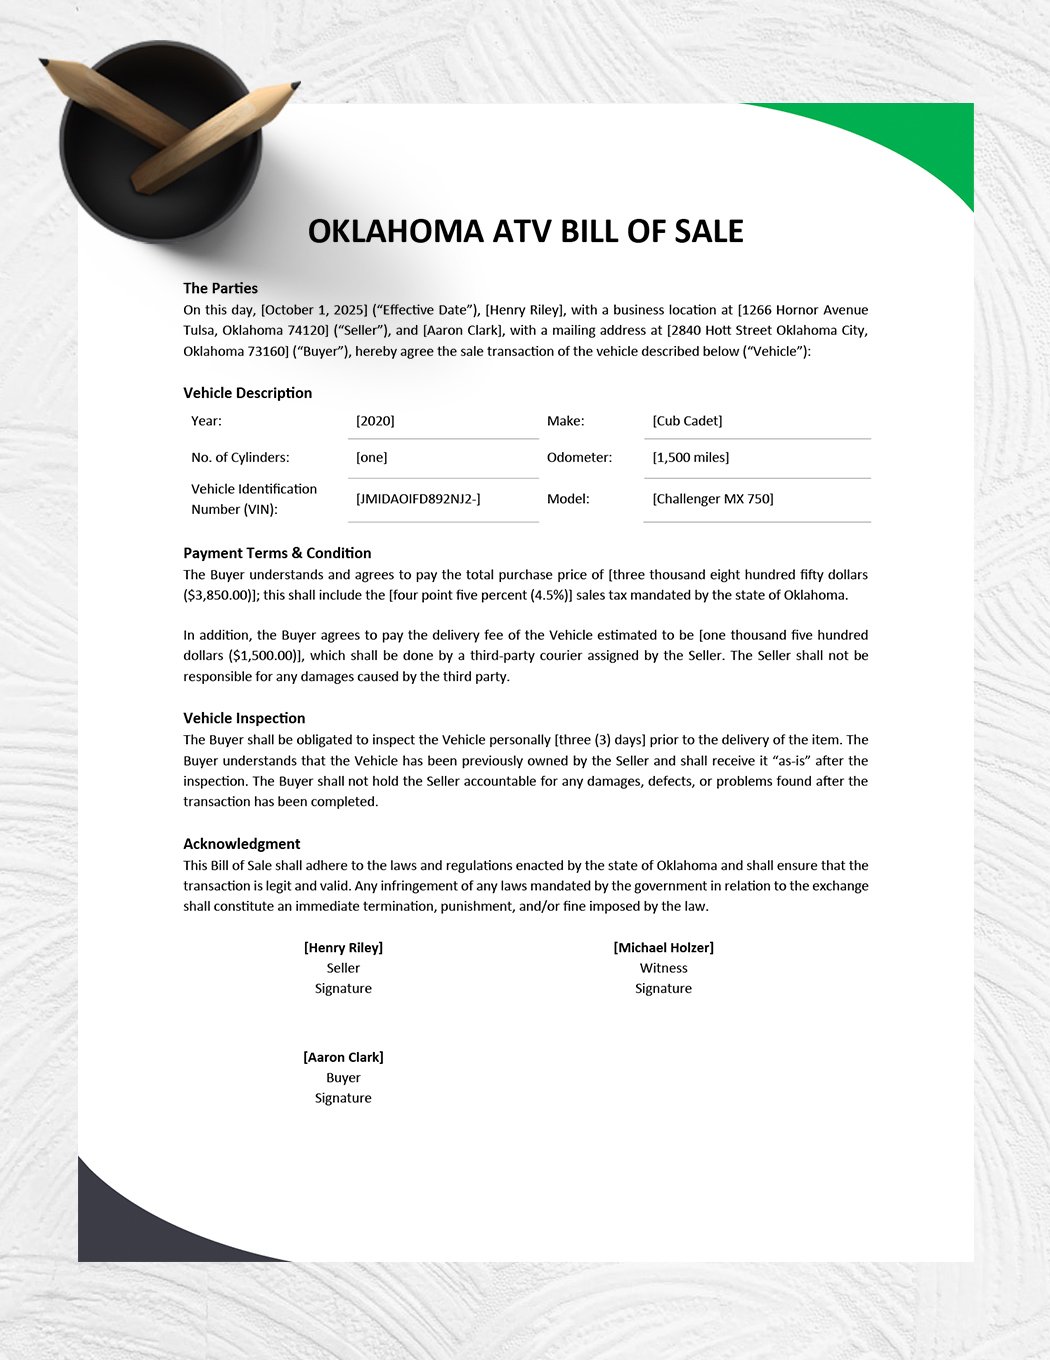 Oklahoma ATV Bill of Sale Form Template